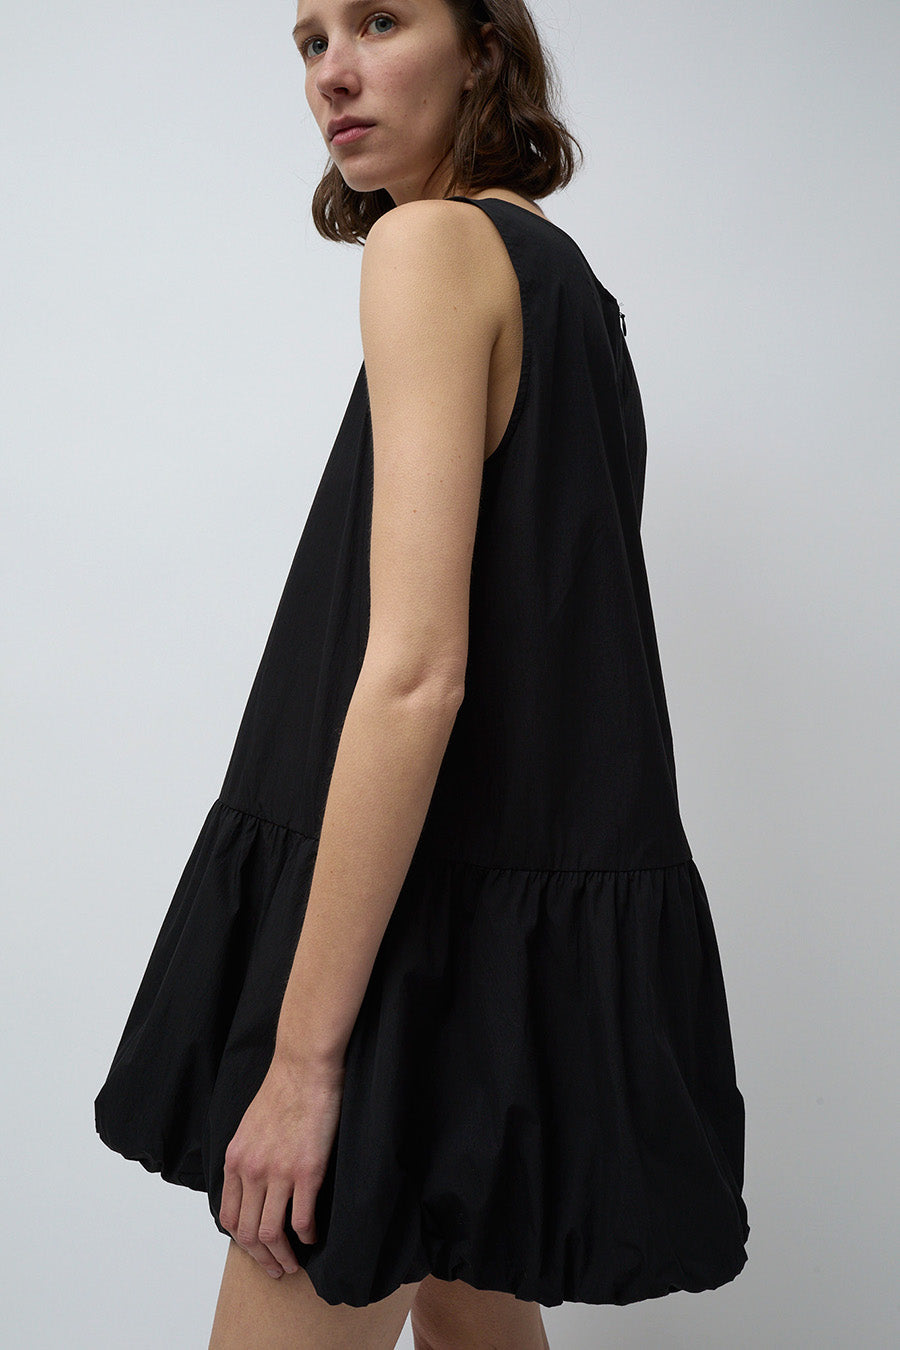 Amomento Volume Mini Dress in Black